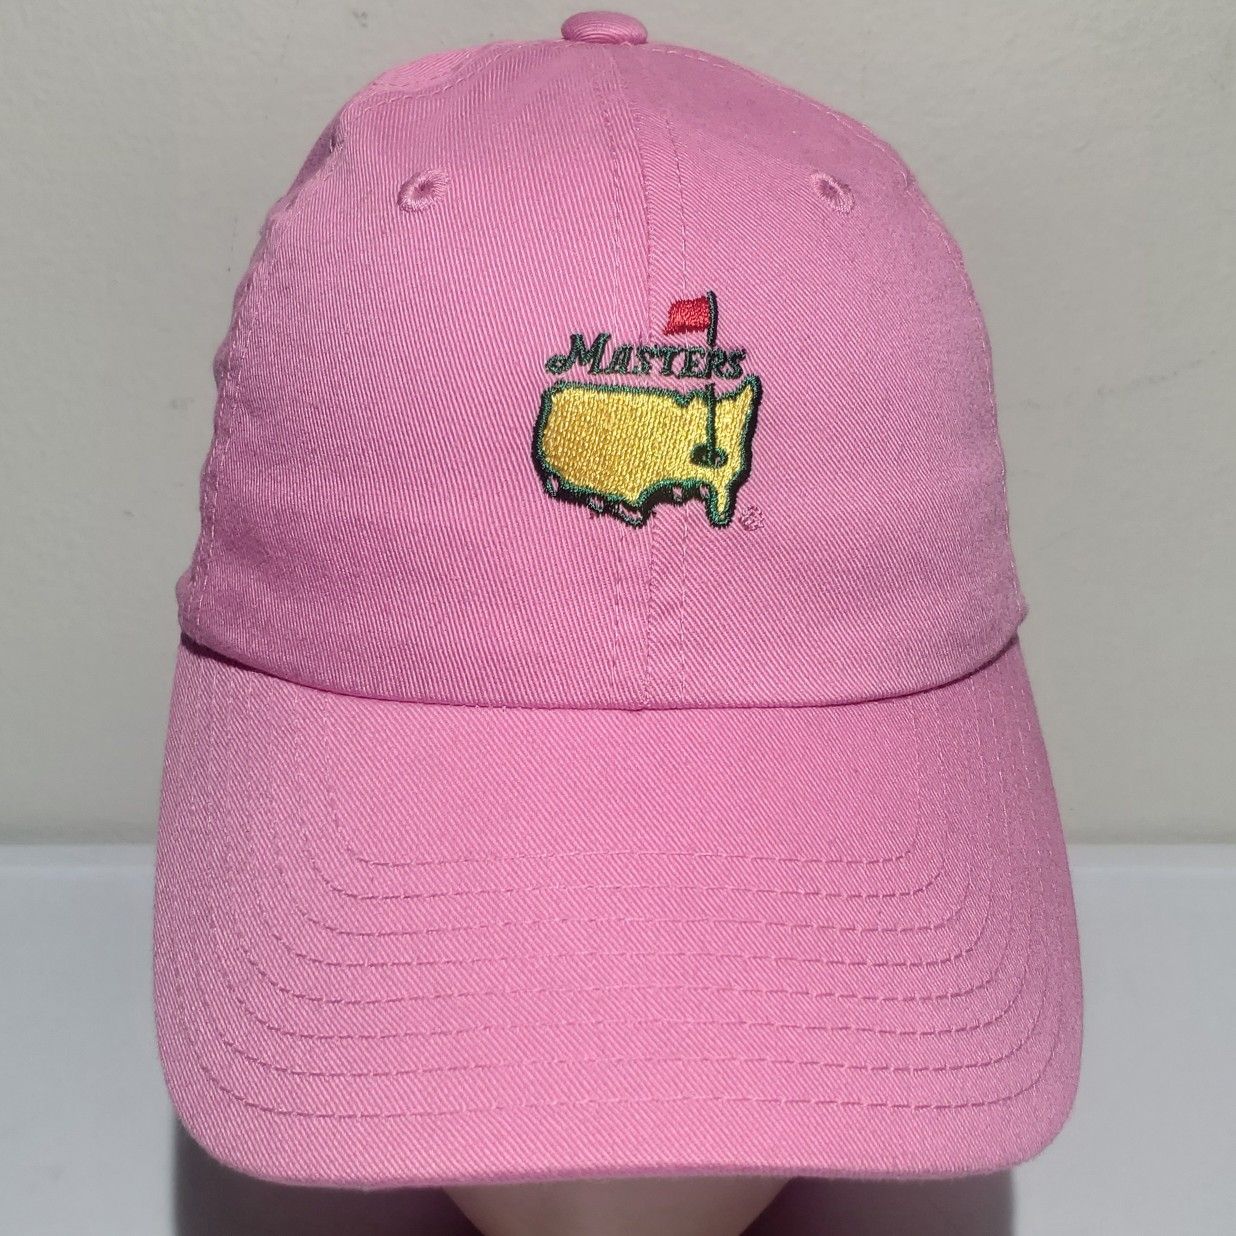 The Masters Pink Strapback Adjustable Hat Golf Cap Magnolia Lane